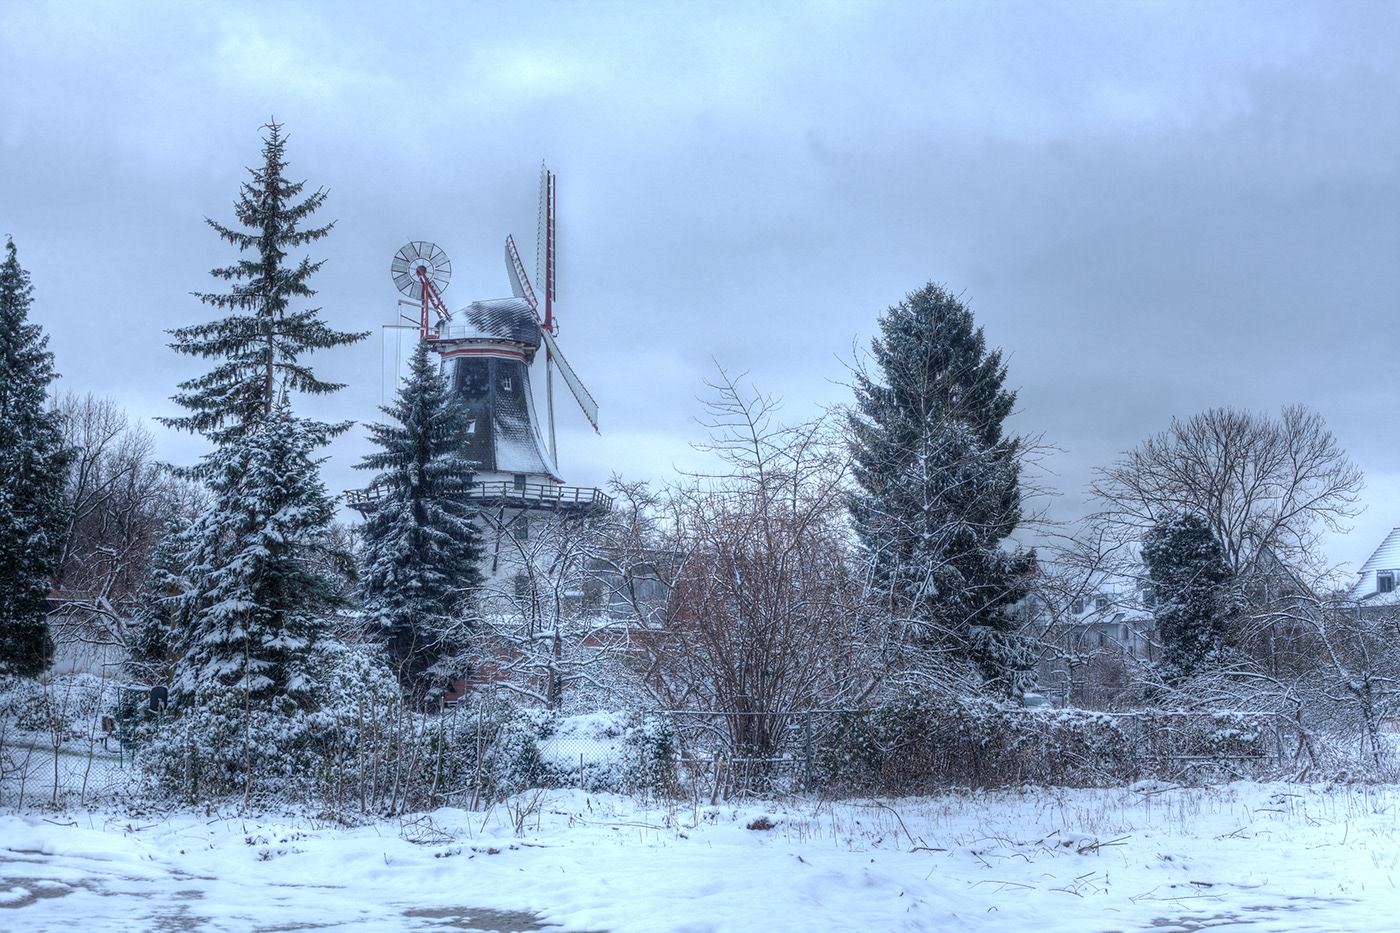 Horn horner Mühle mill smock mill Windmuhle snowflakes winter snow Bremen